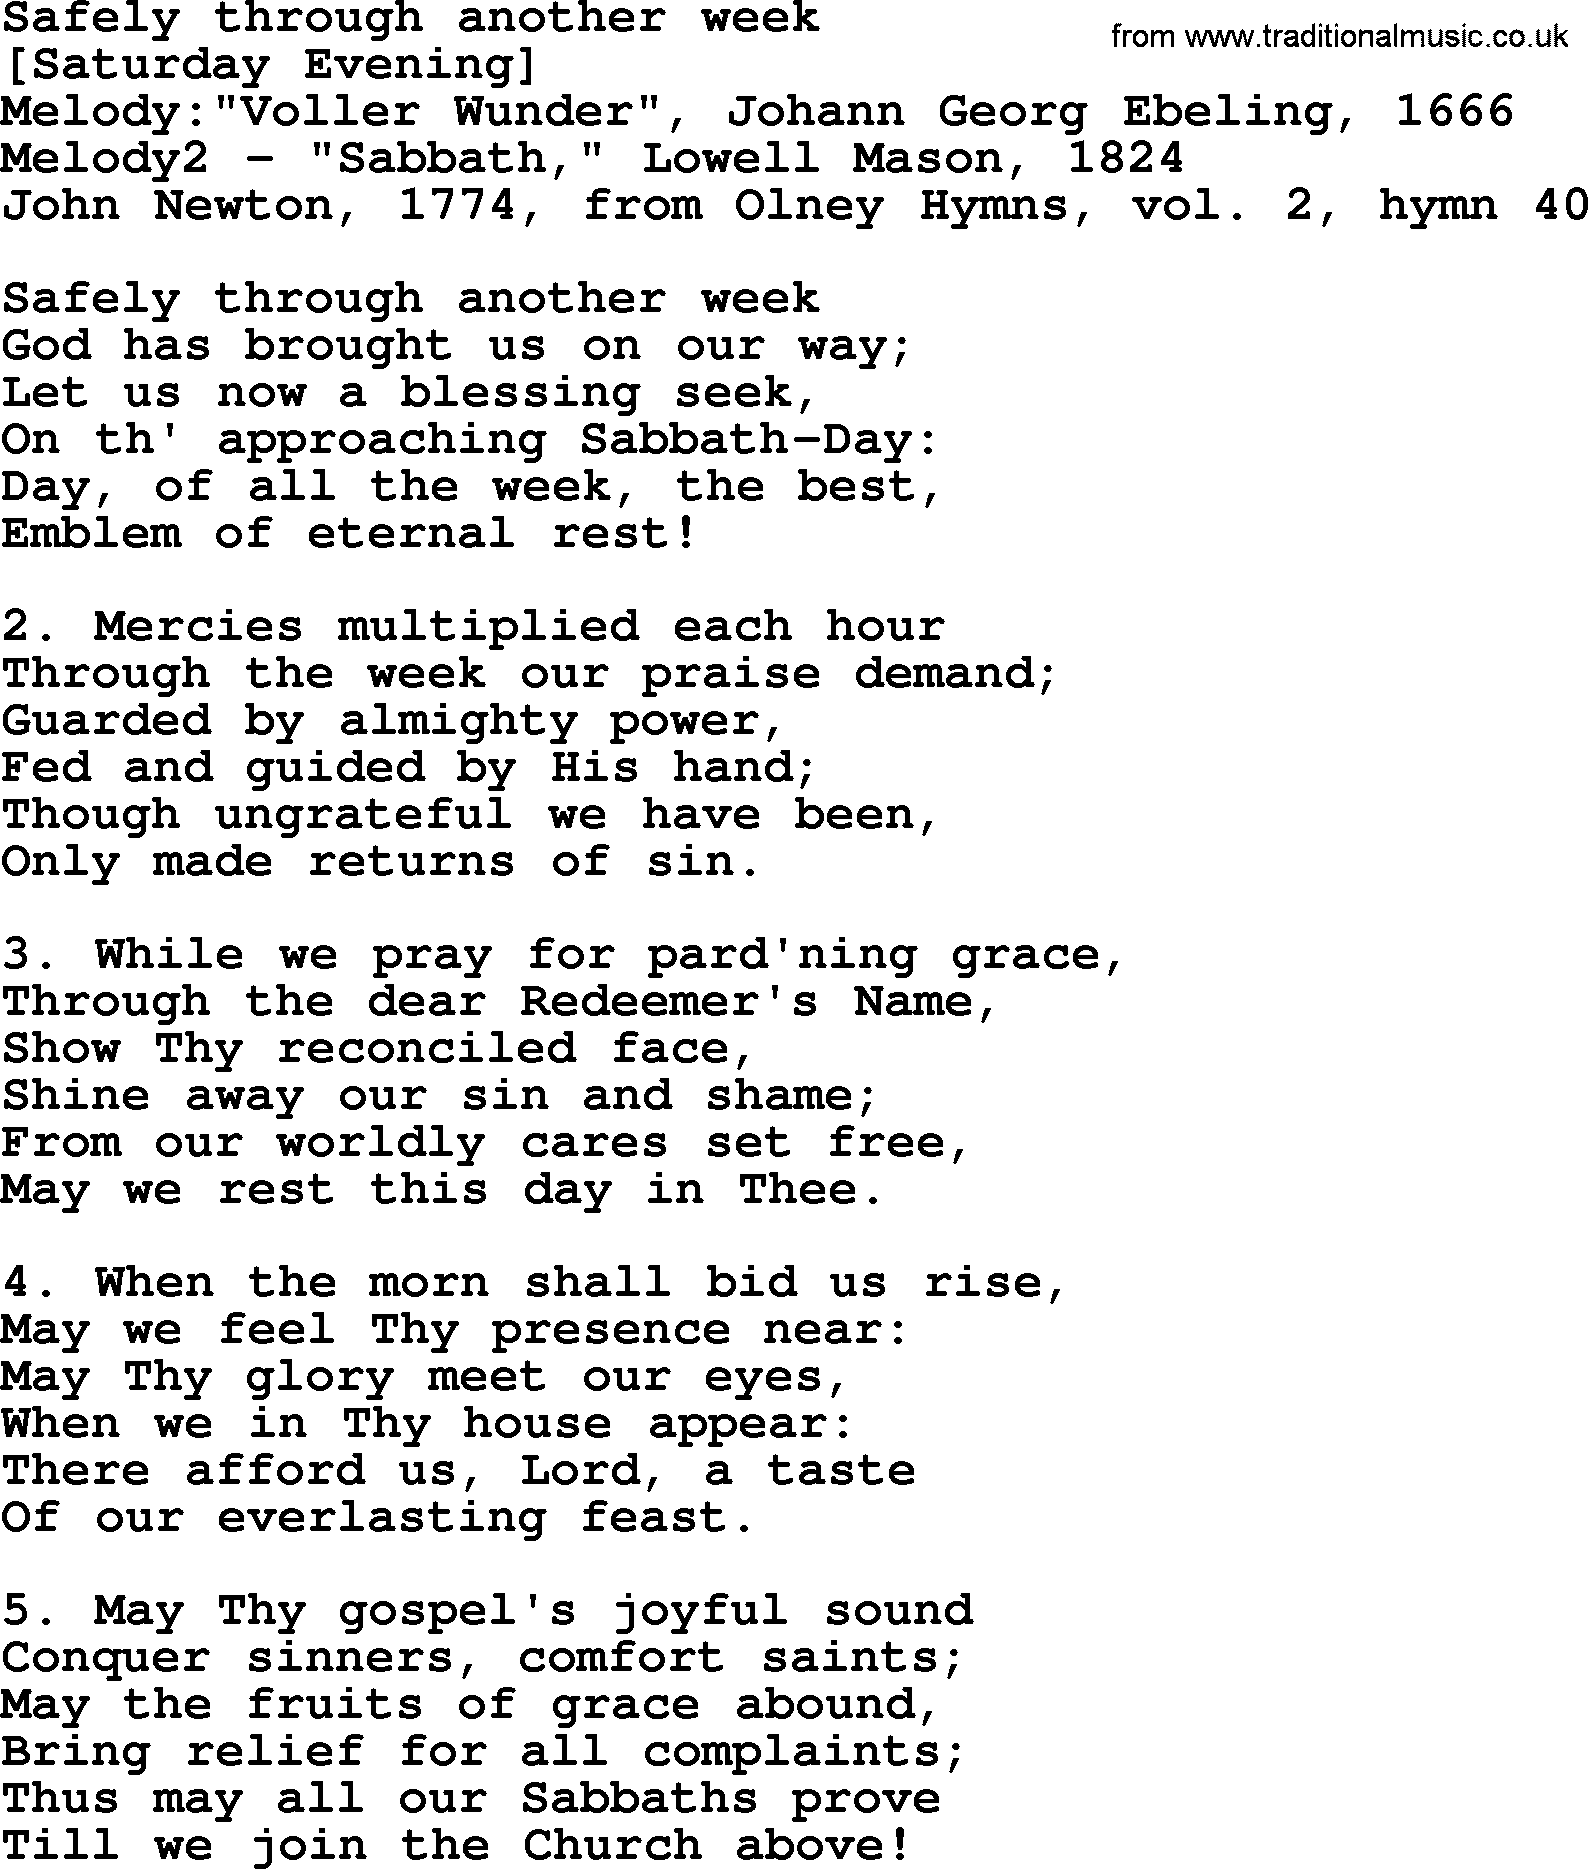 Old English Song: Safely Through Another Week lyrics